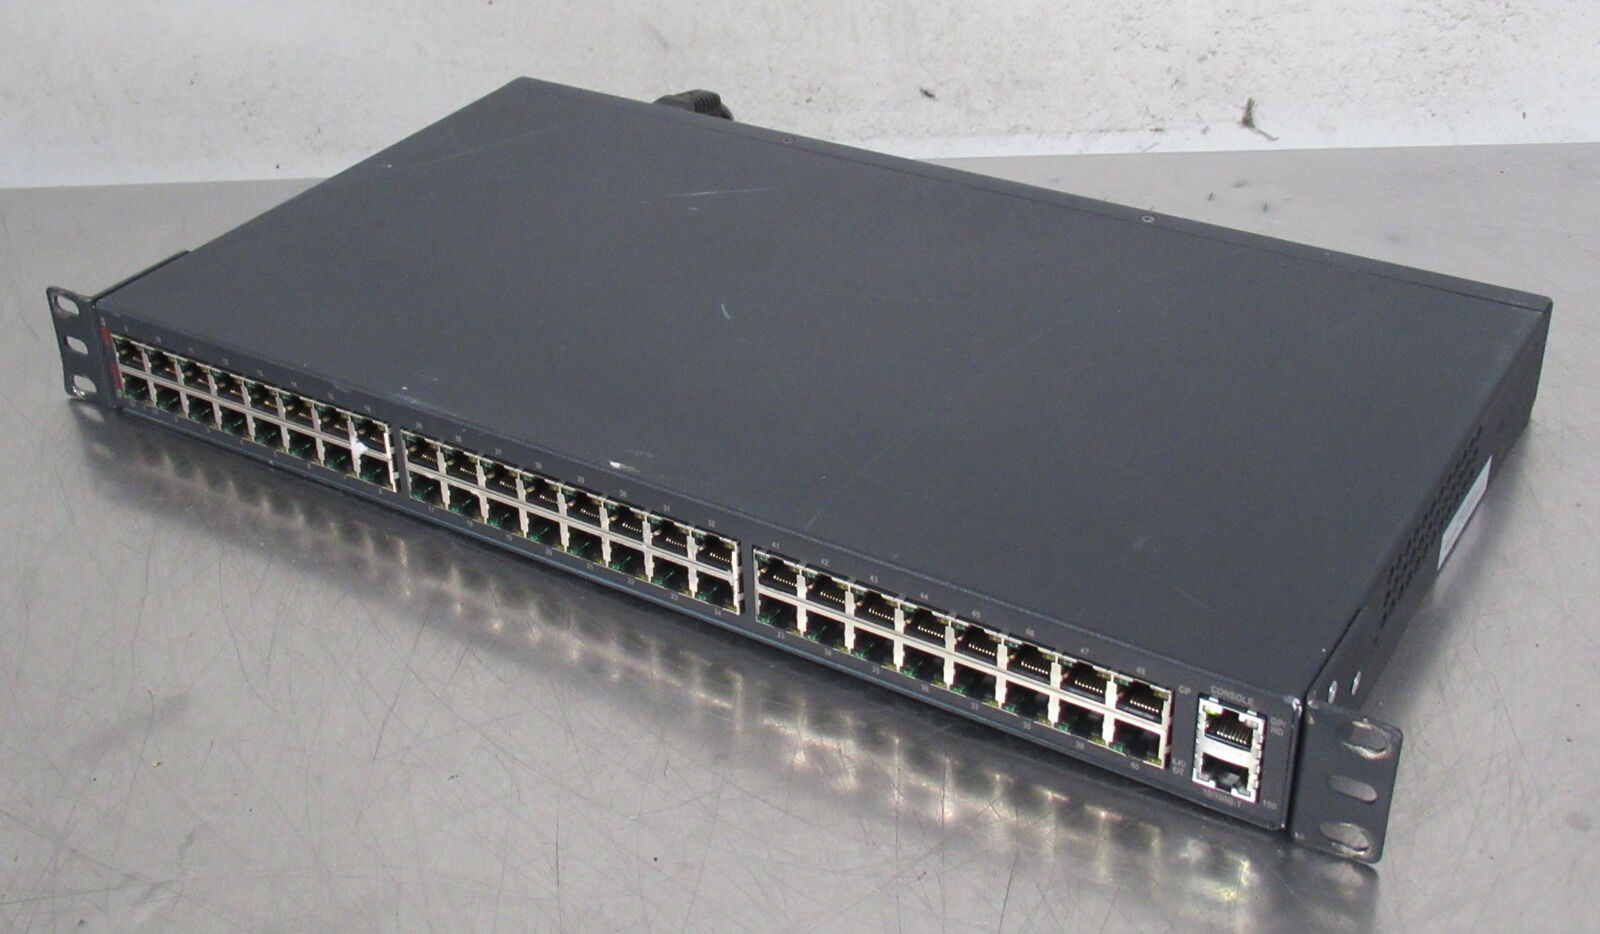 T185500 Avocent Cyclades Acs48 Sac Advanced Console Server Single Ac 520-500-503